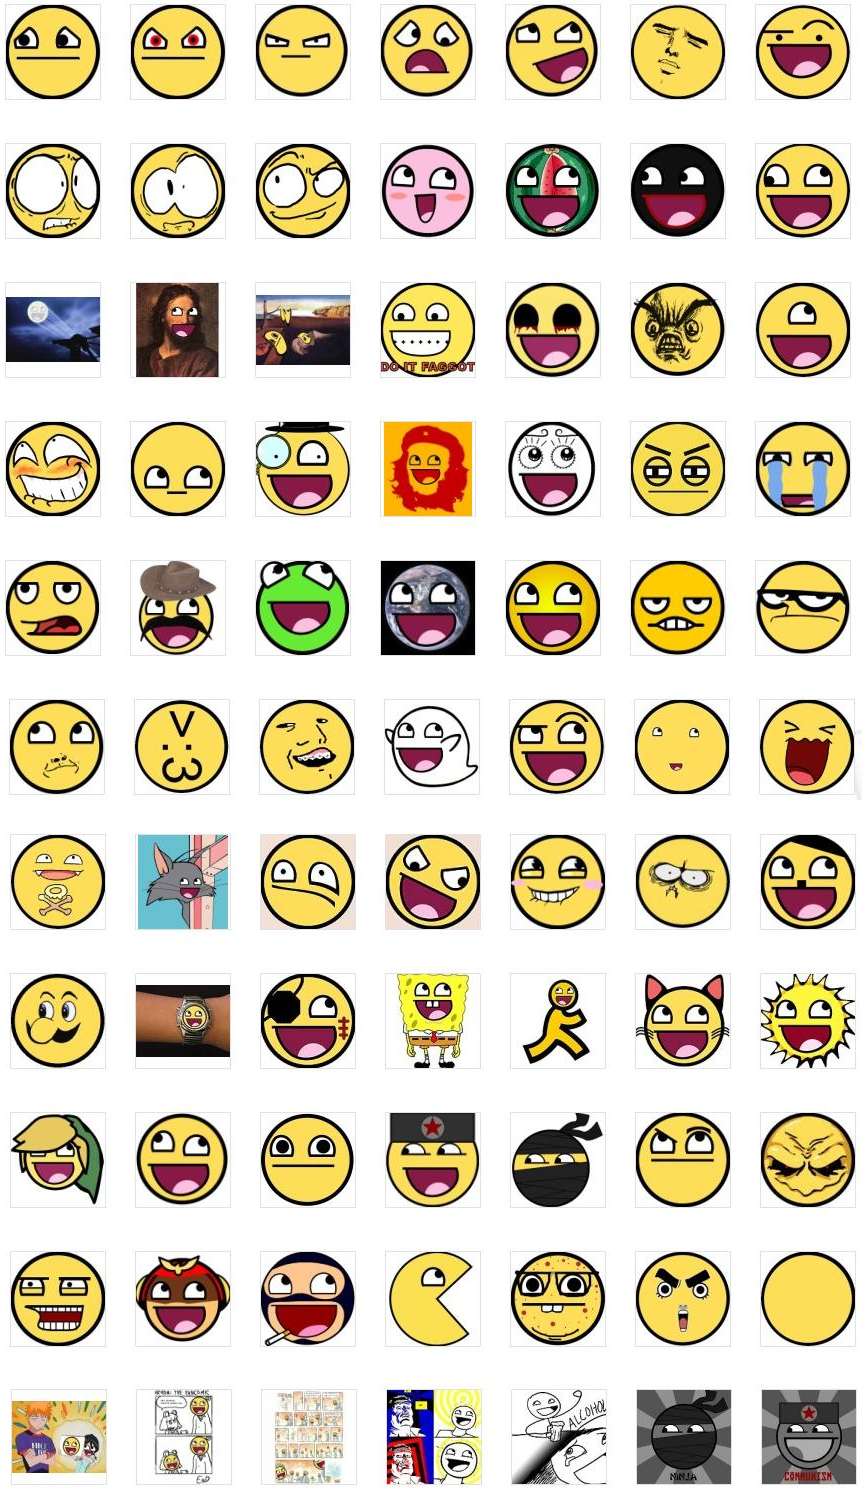 Artistically Awesome(яυву'ѕ αят вσσк #2) - Emoji Face Meme - Wattpad